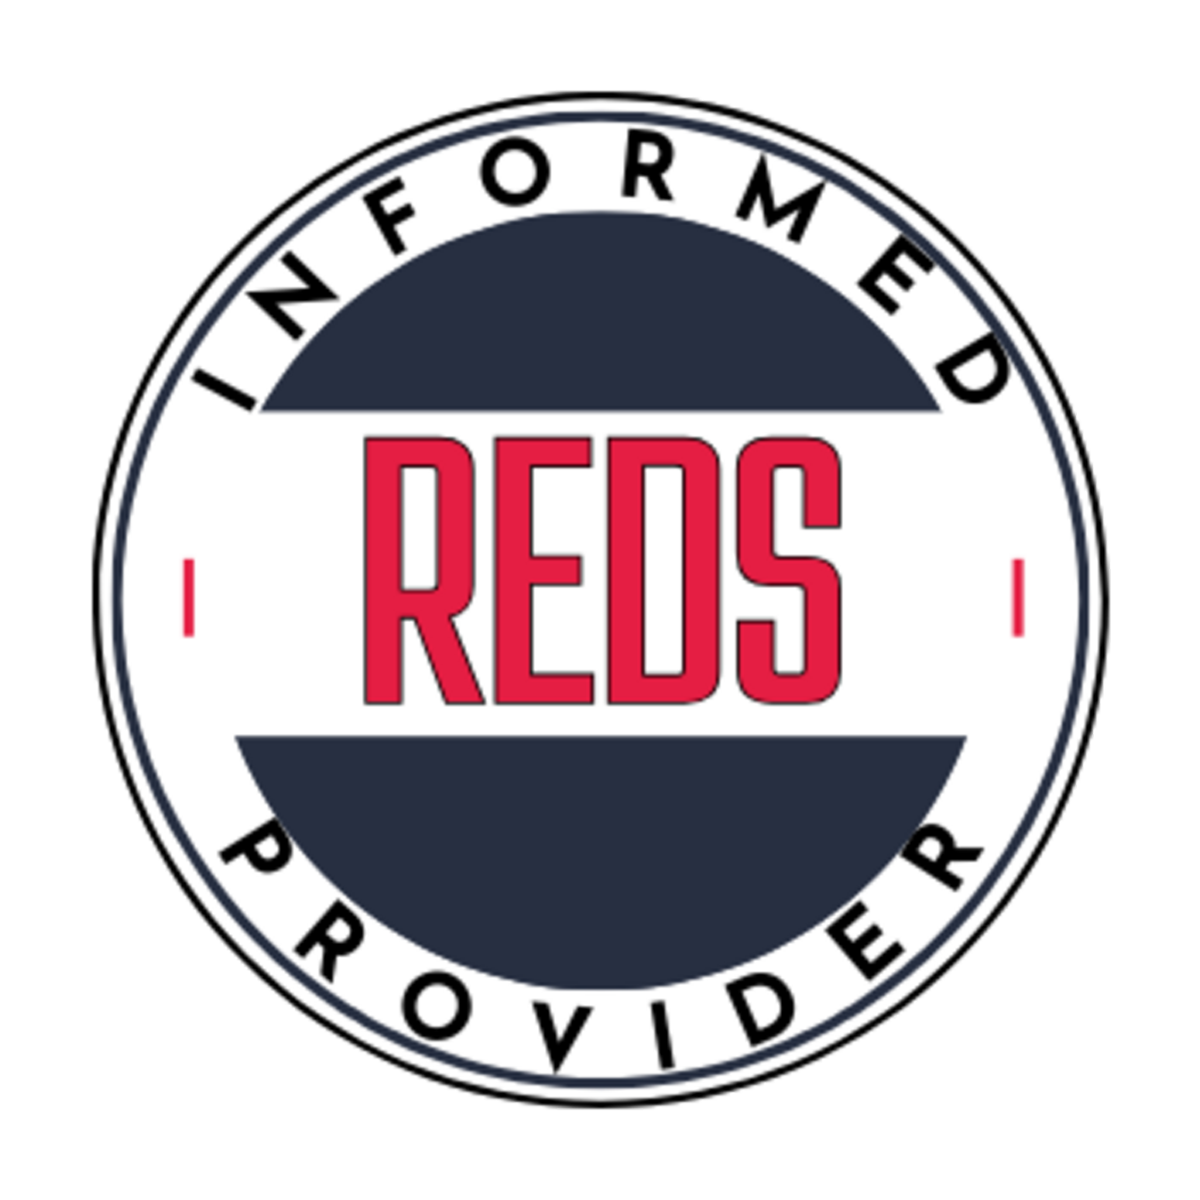 Informed-REDS-Provider-Badge, image of badge for the program.